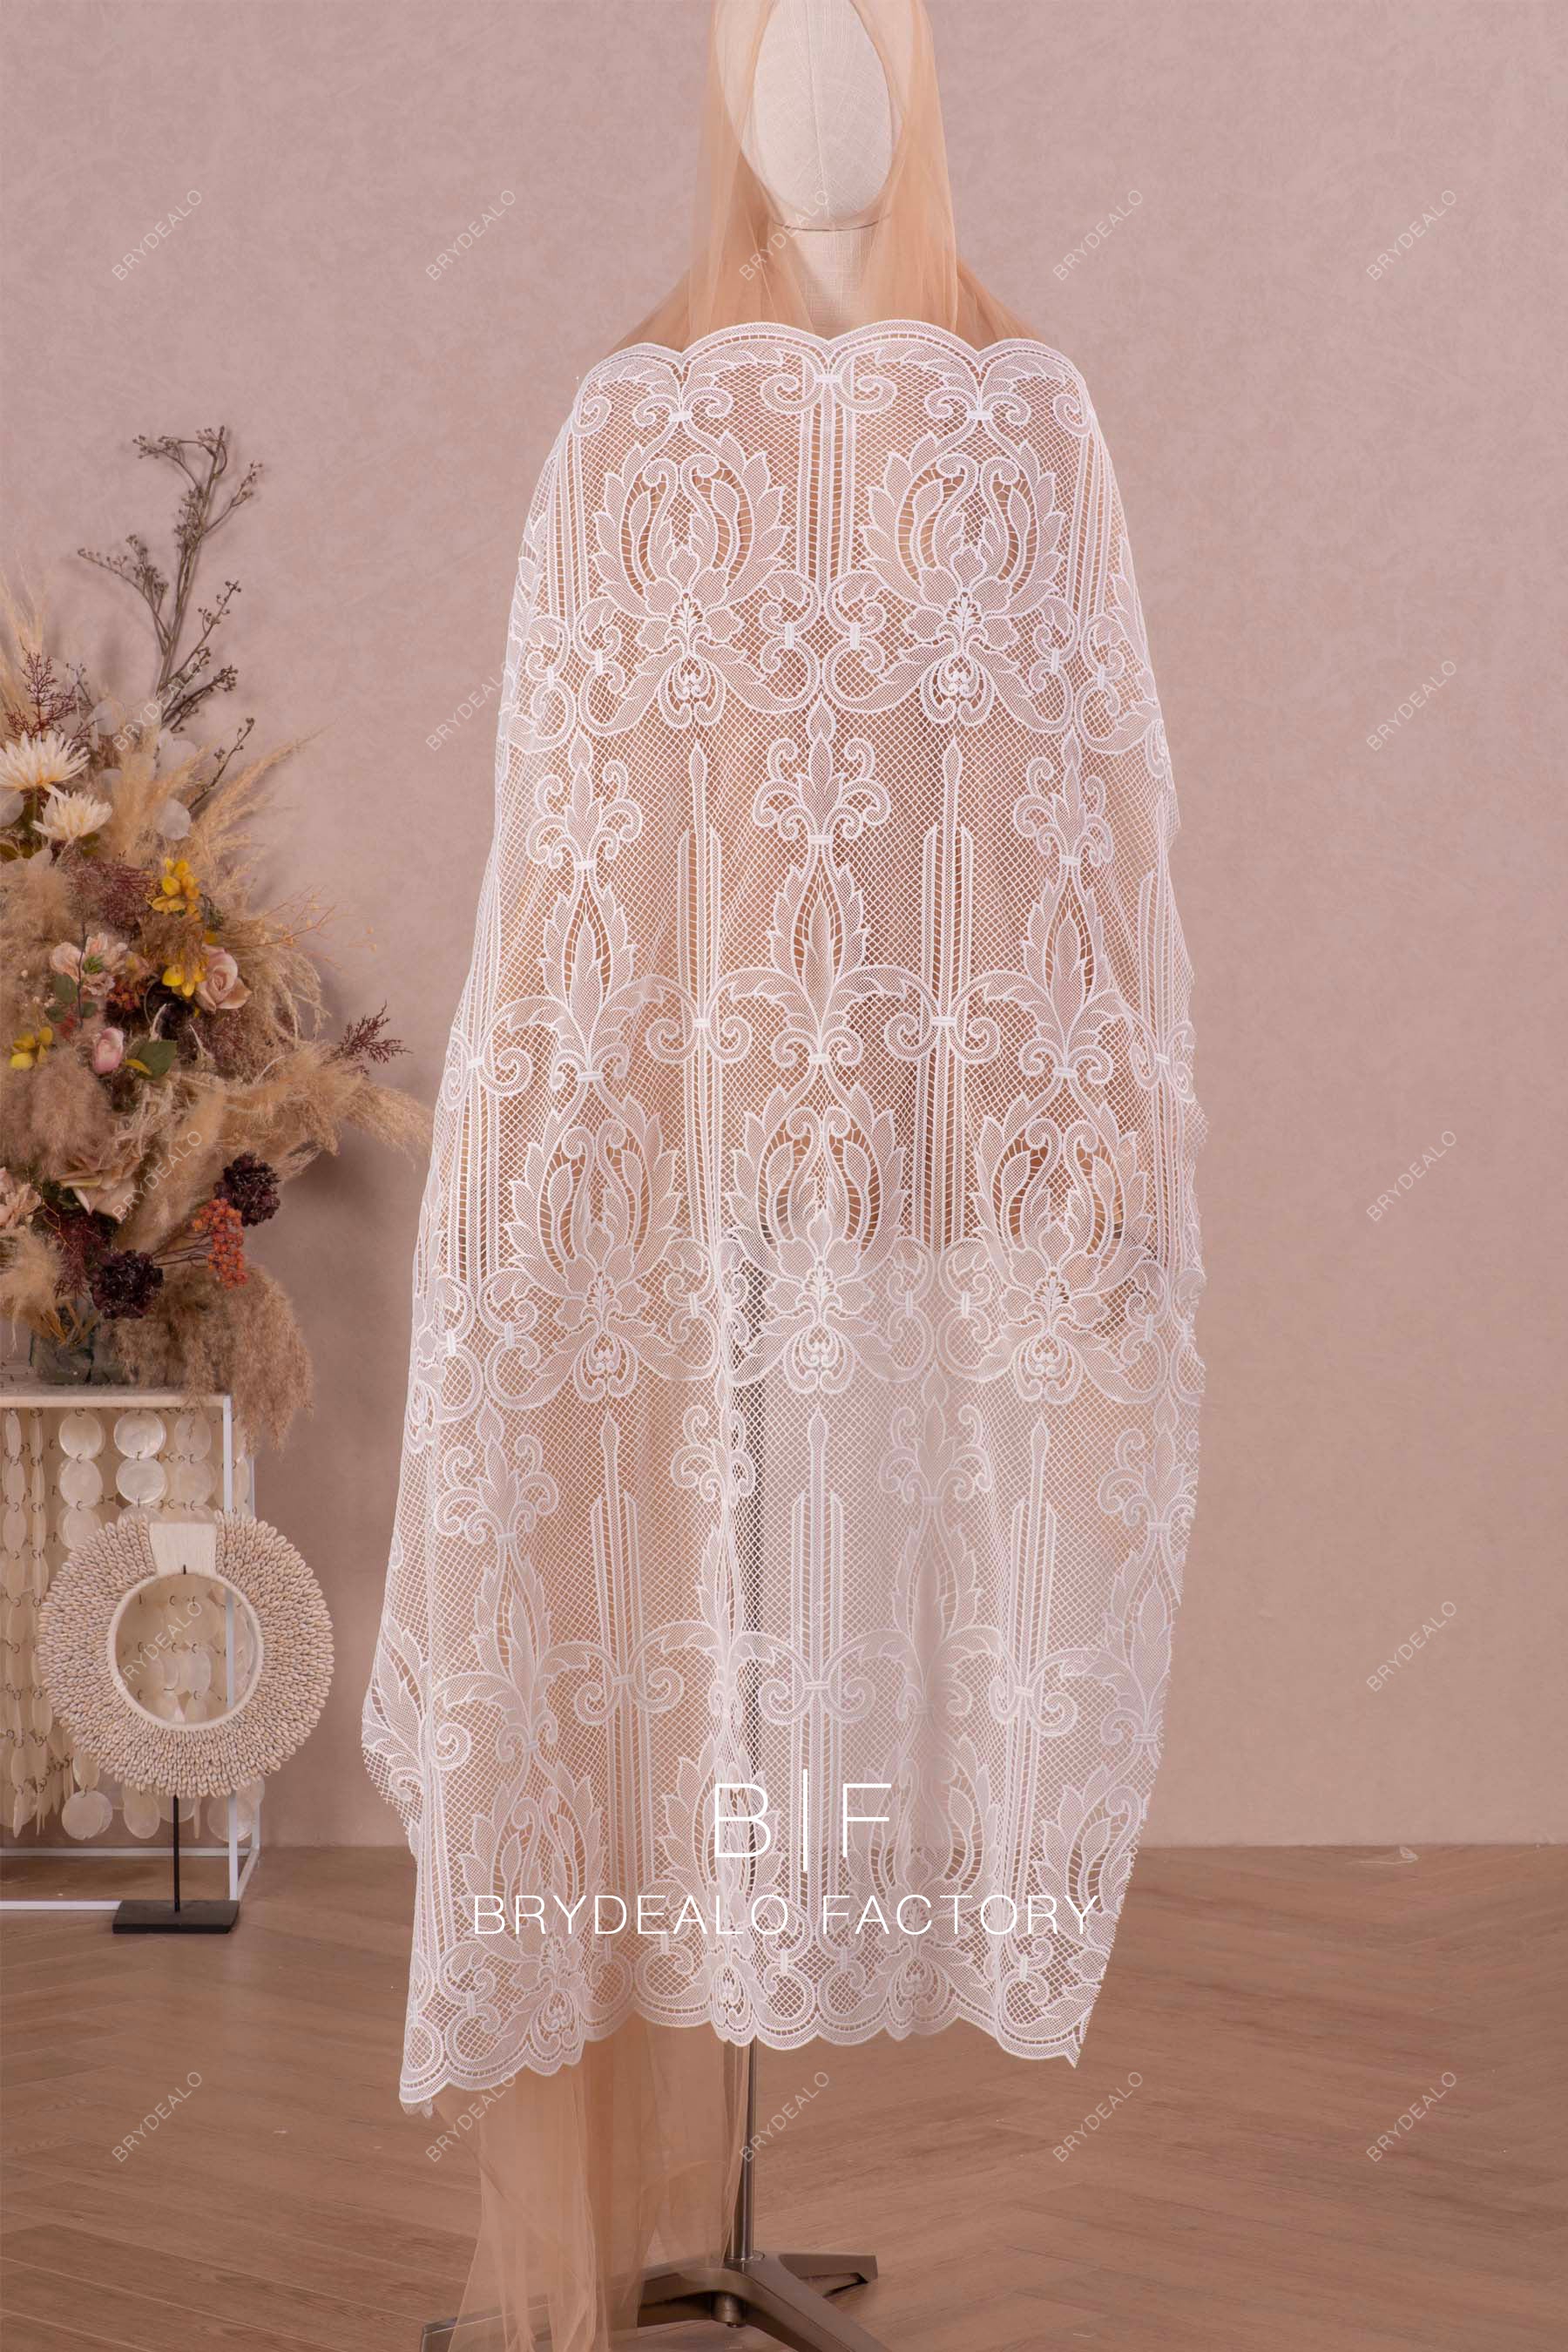 symmetrical pattern lace fabric